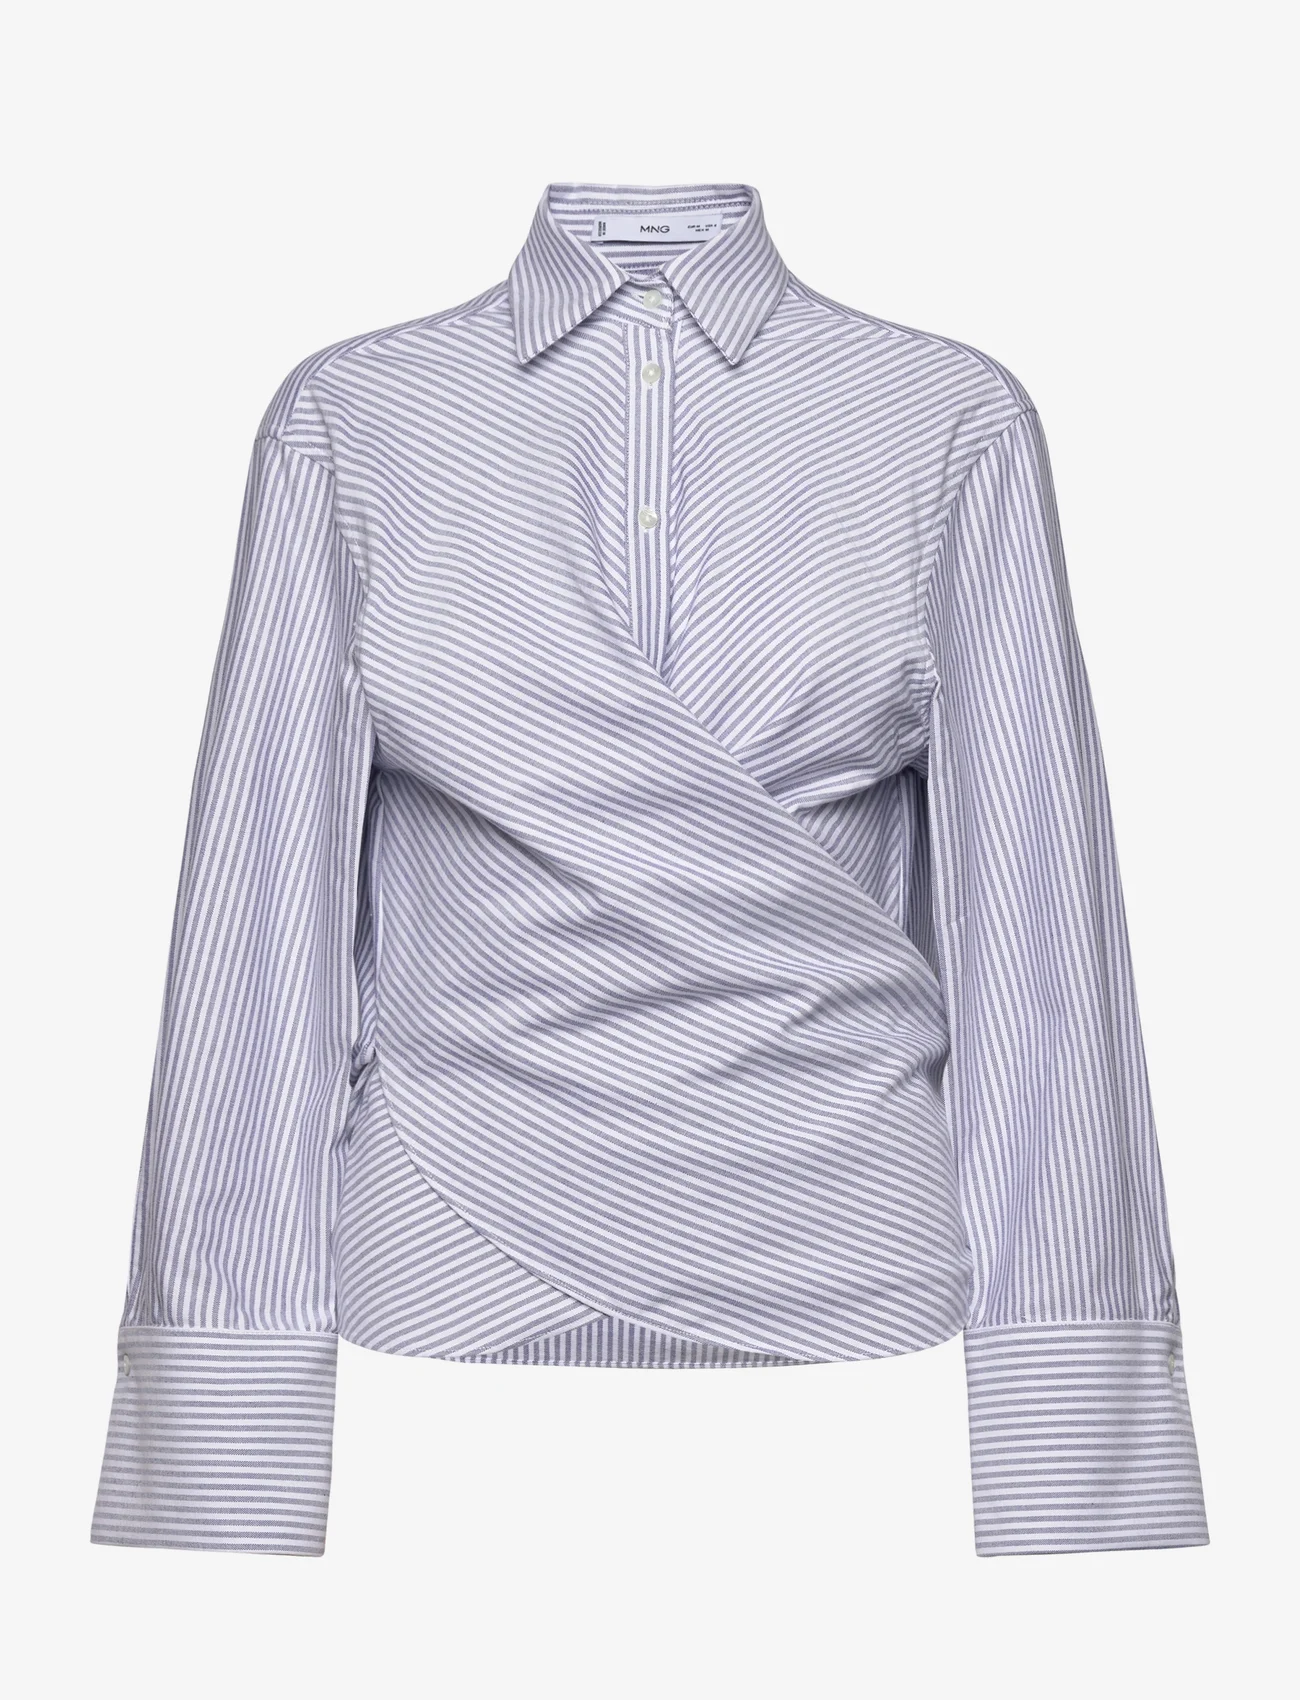 Mango - Striped cotton wrap blouse - medium blue - 0